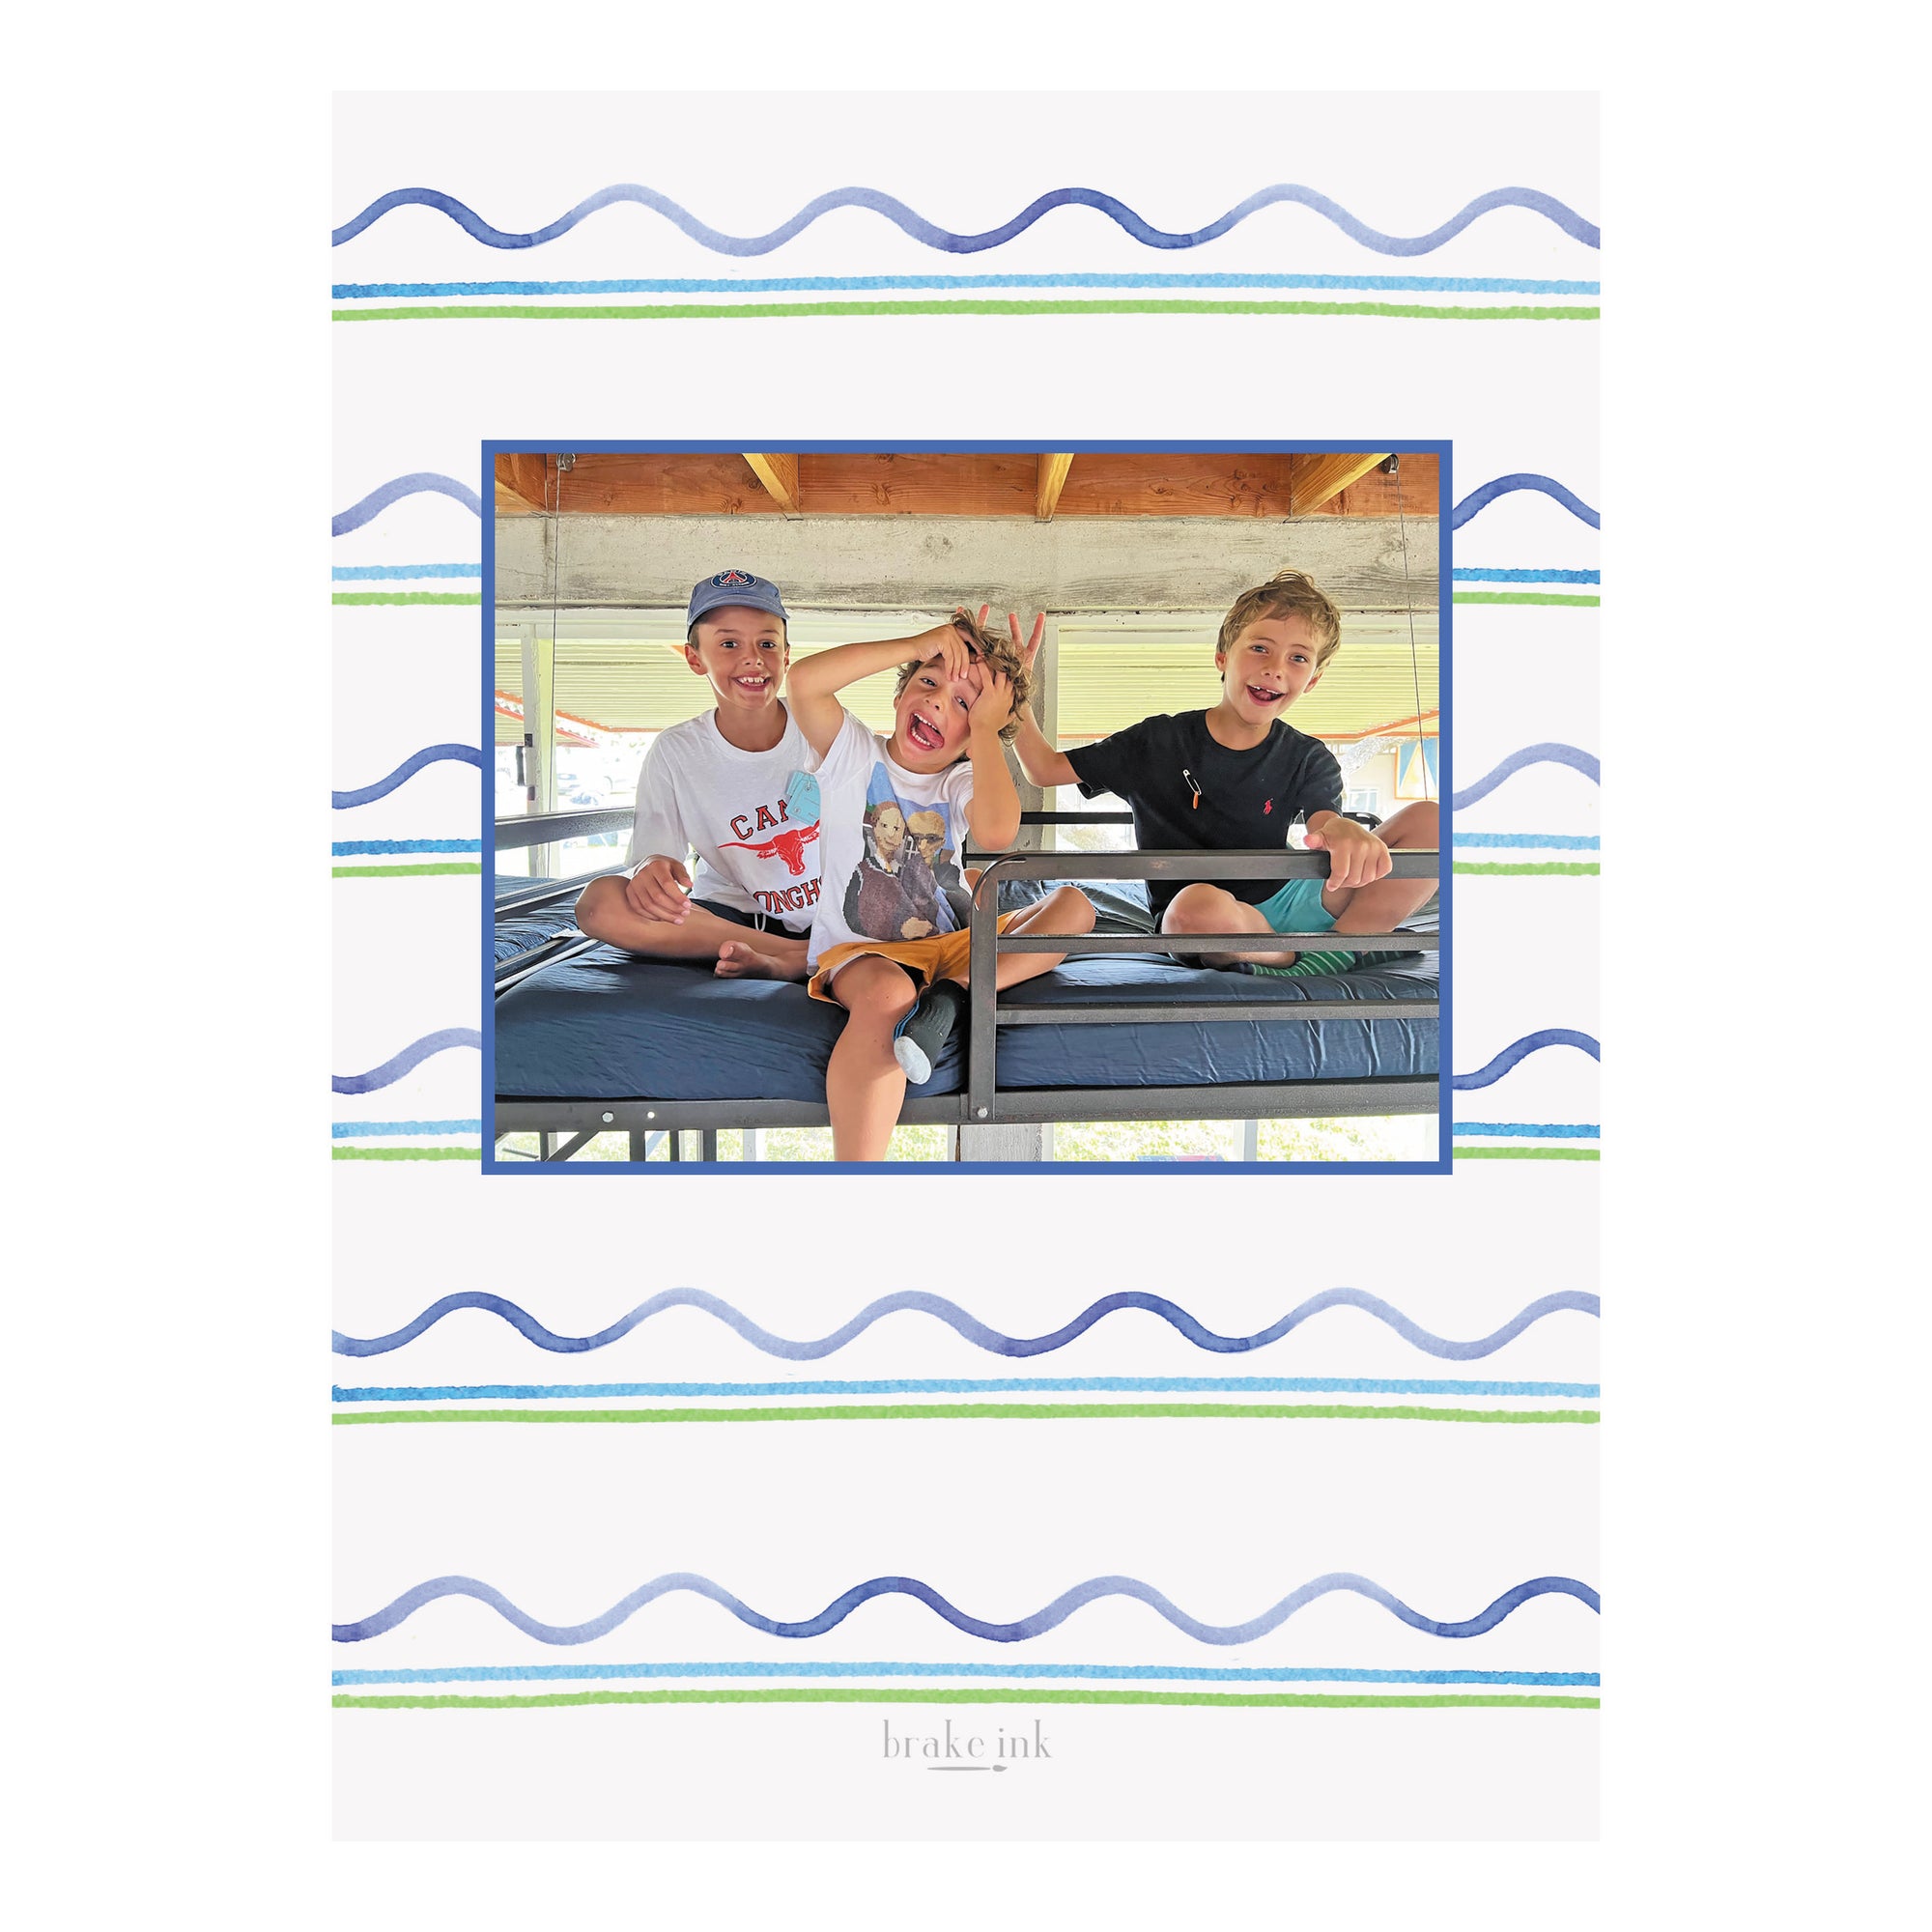 Sugarplum Swirls Holiday Photo Cards- Blue/Green